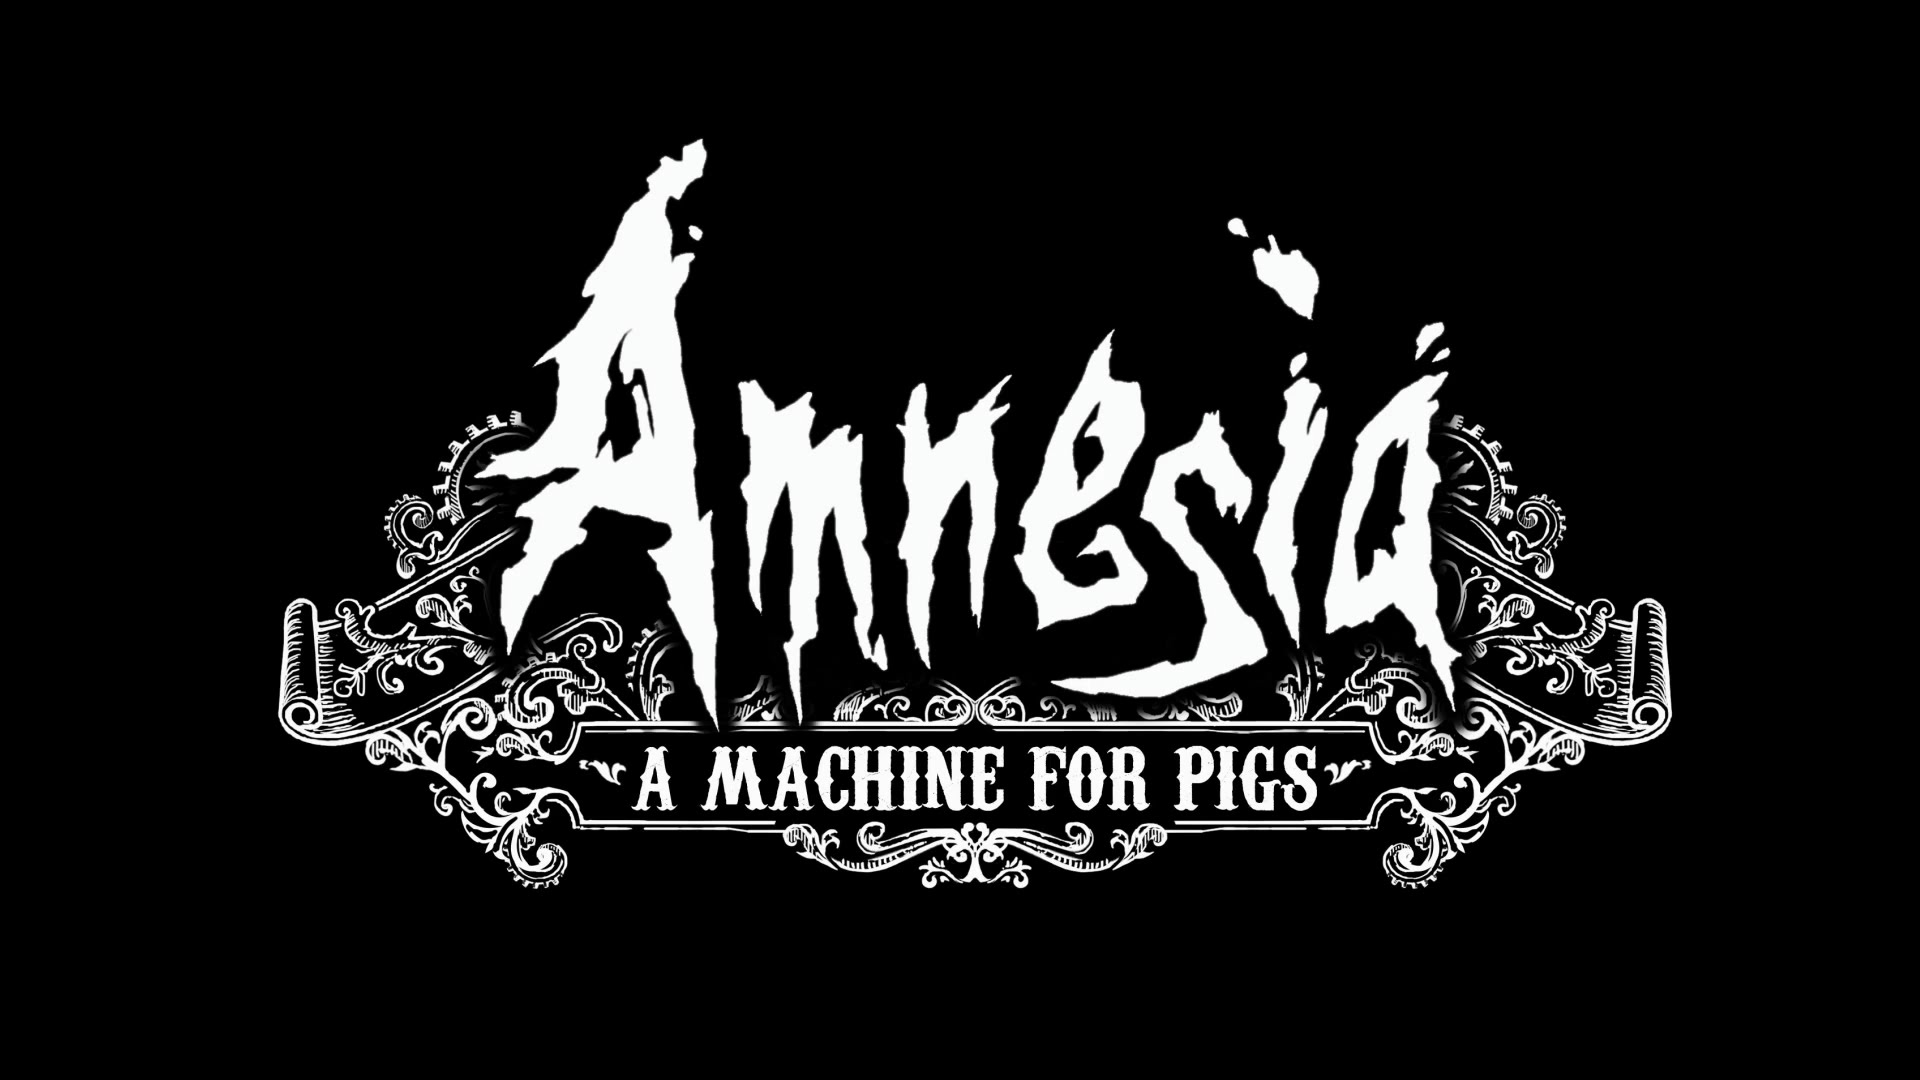 Drenant l'aigua i el malparit invisible. Amnesia: A machine for pigs #12 de Parlem d'Economia